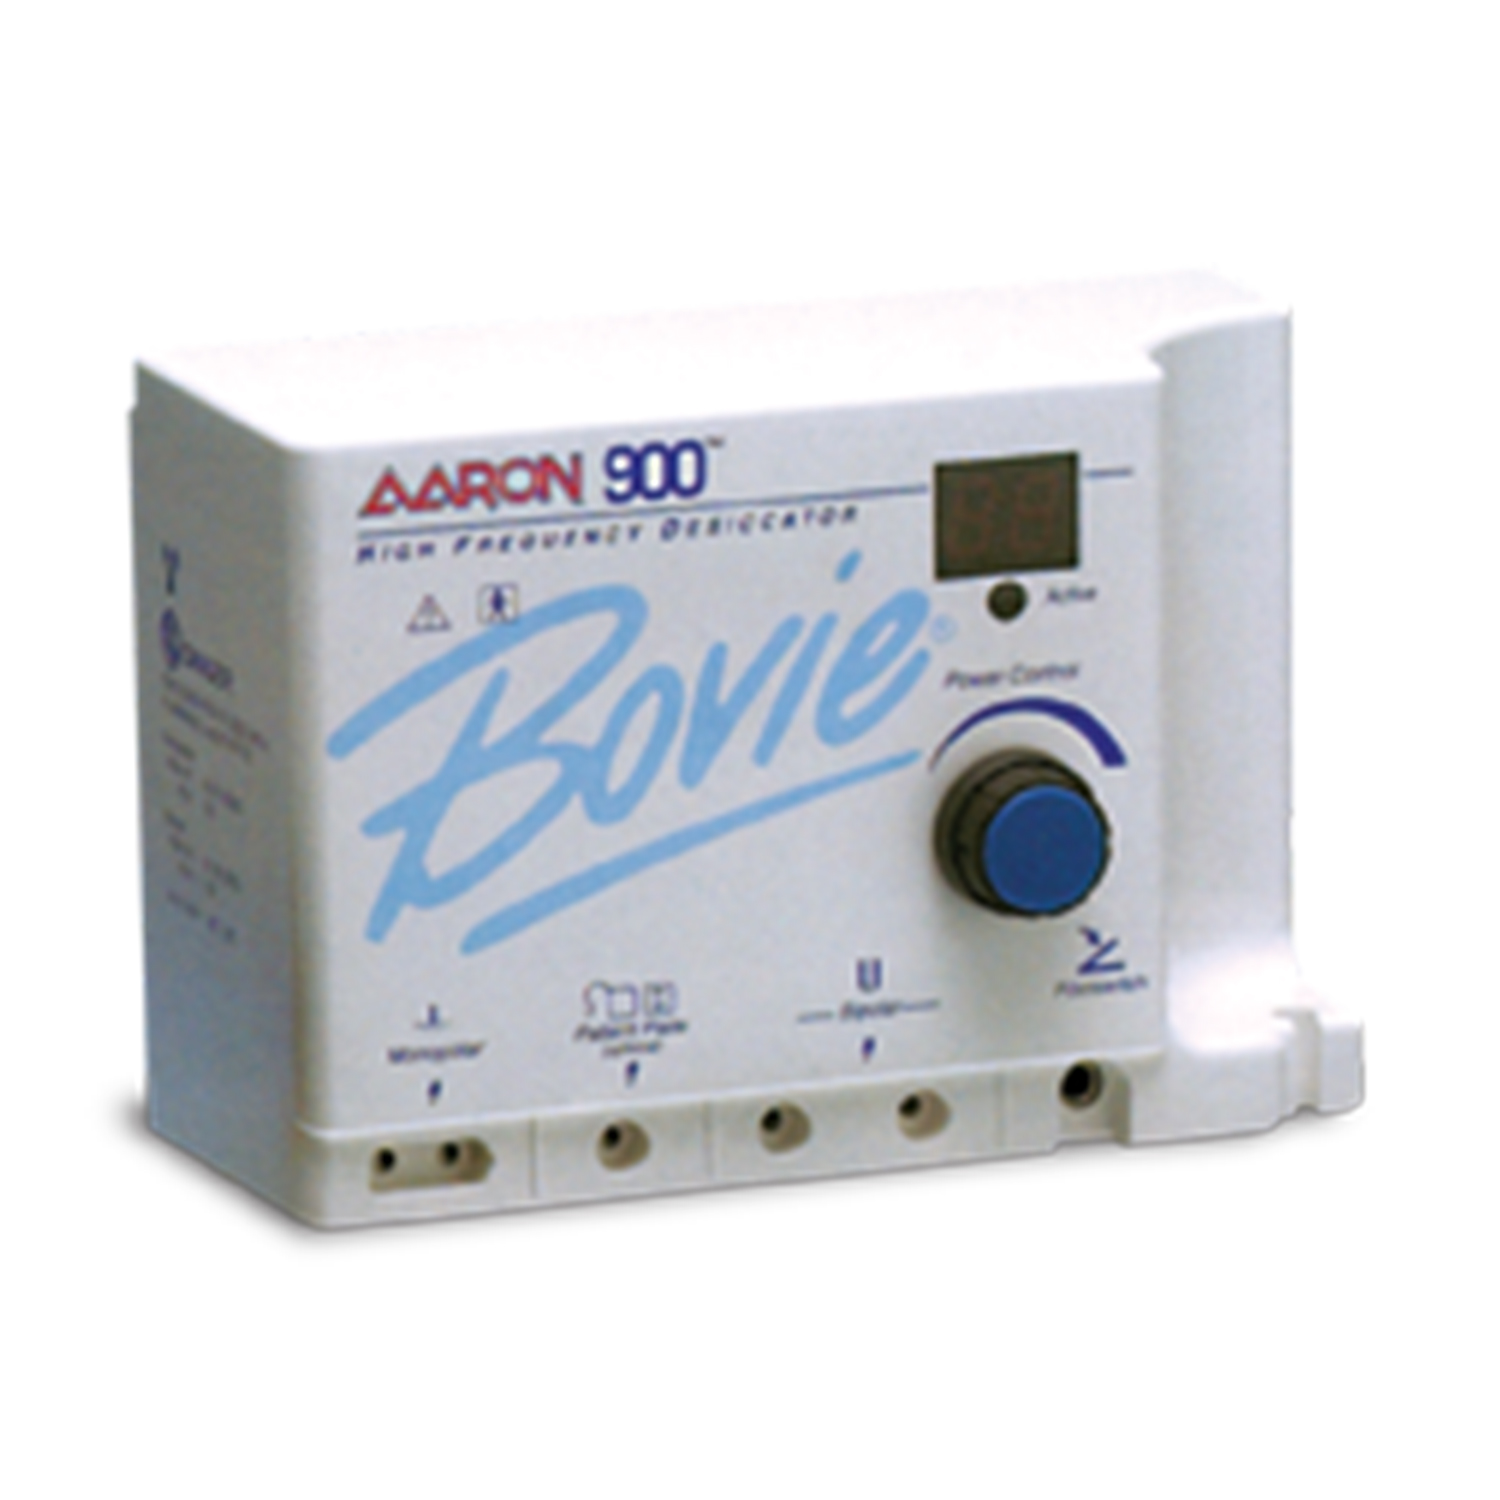 Aaron Bovie 900 Hyfrecator - Desiccator